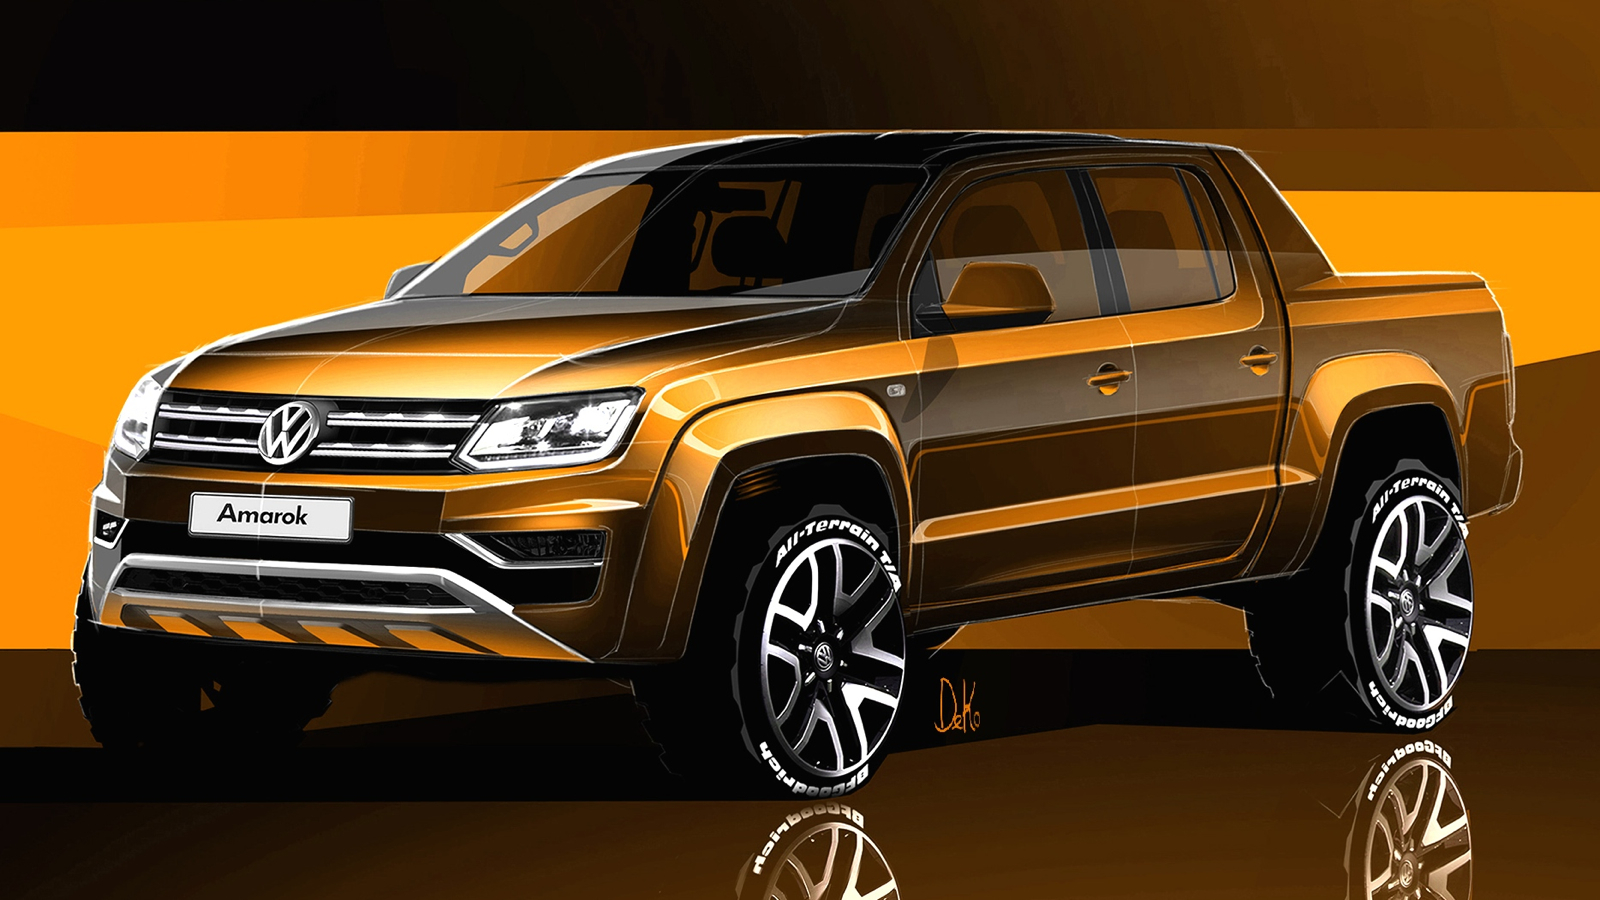 2022 Volkswagen Amarok sketches revealed photos CarAdvice